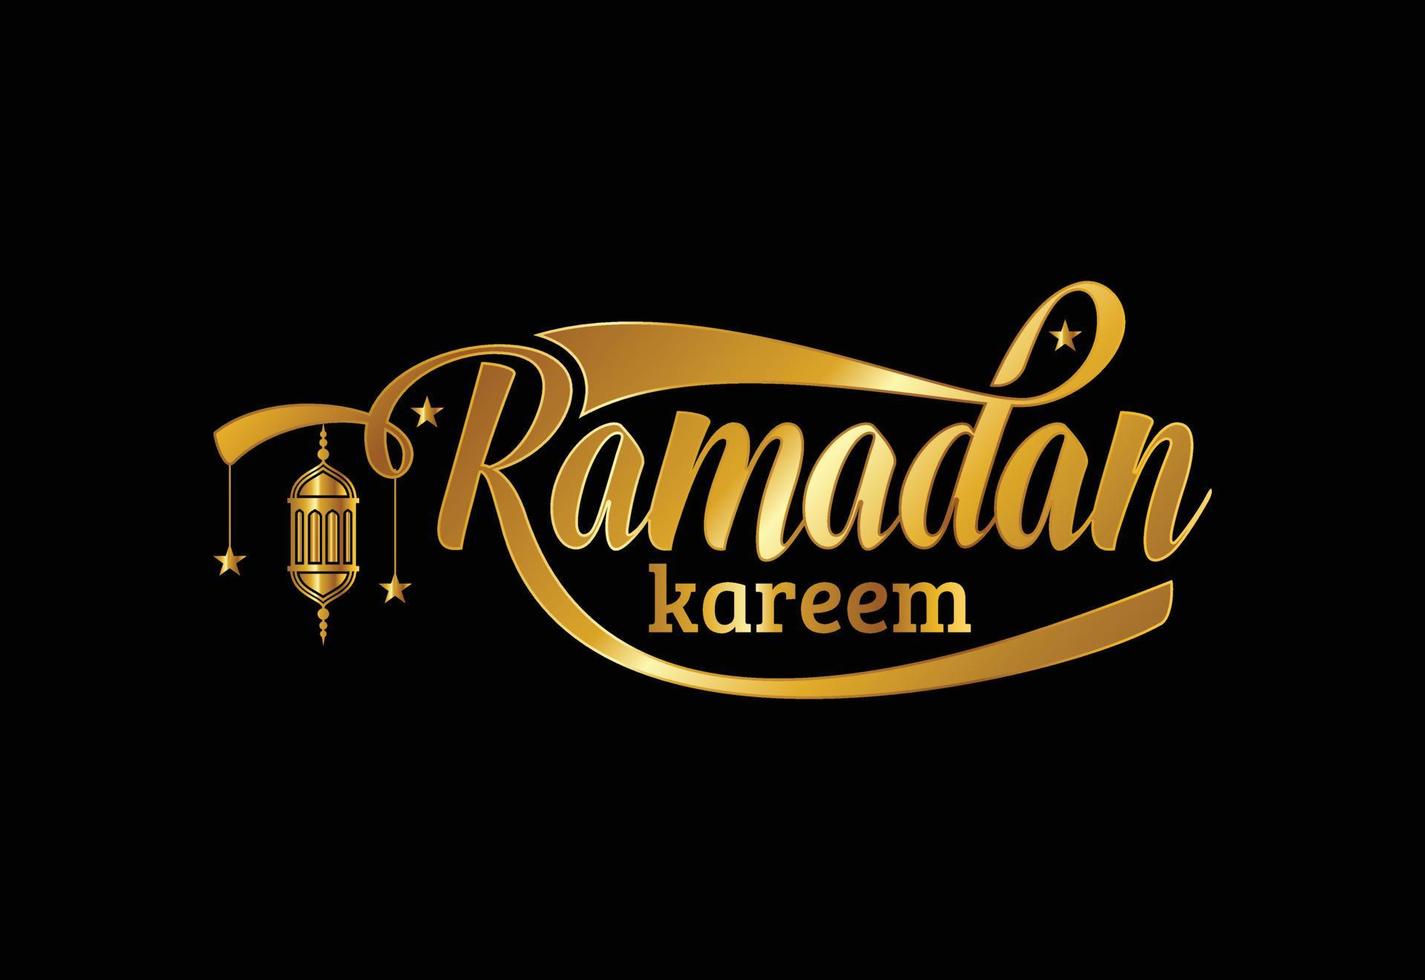 glückliches ramadan kareem islamisches design, ramadan mubarak vektor